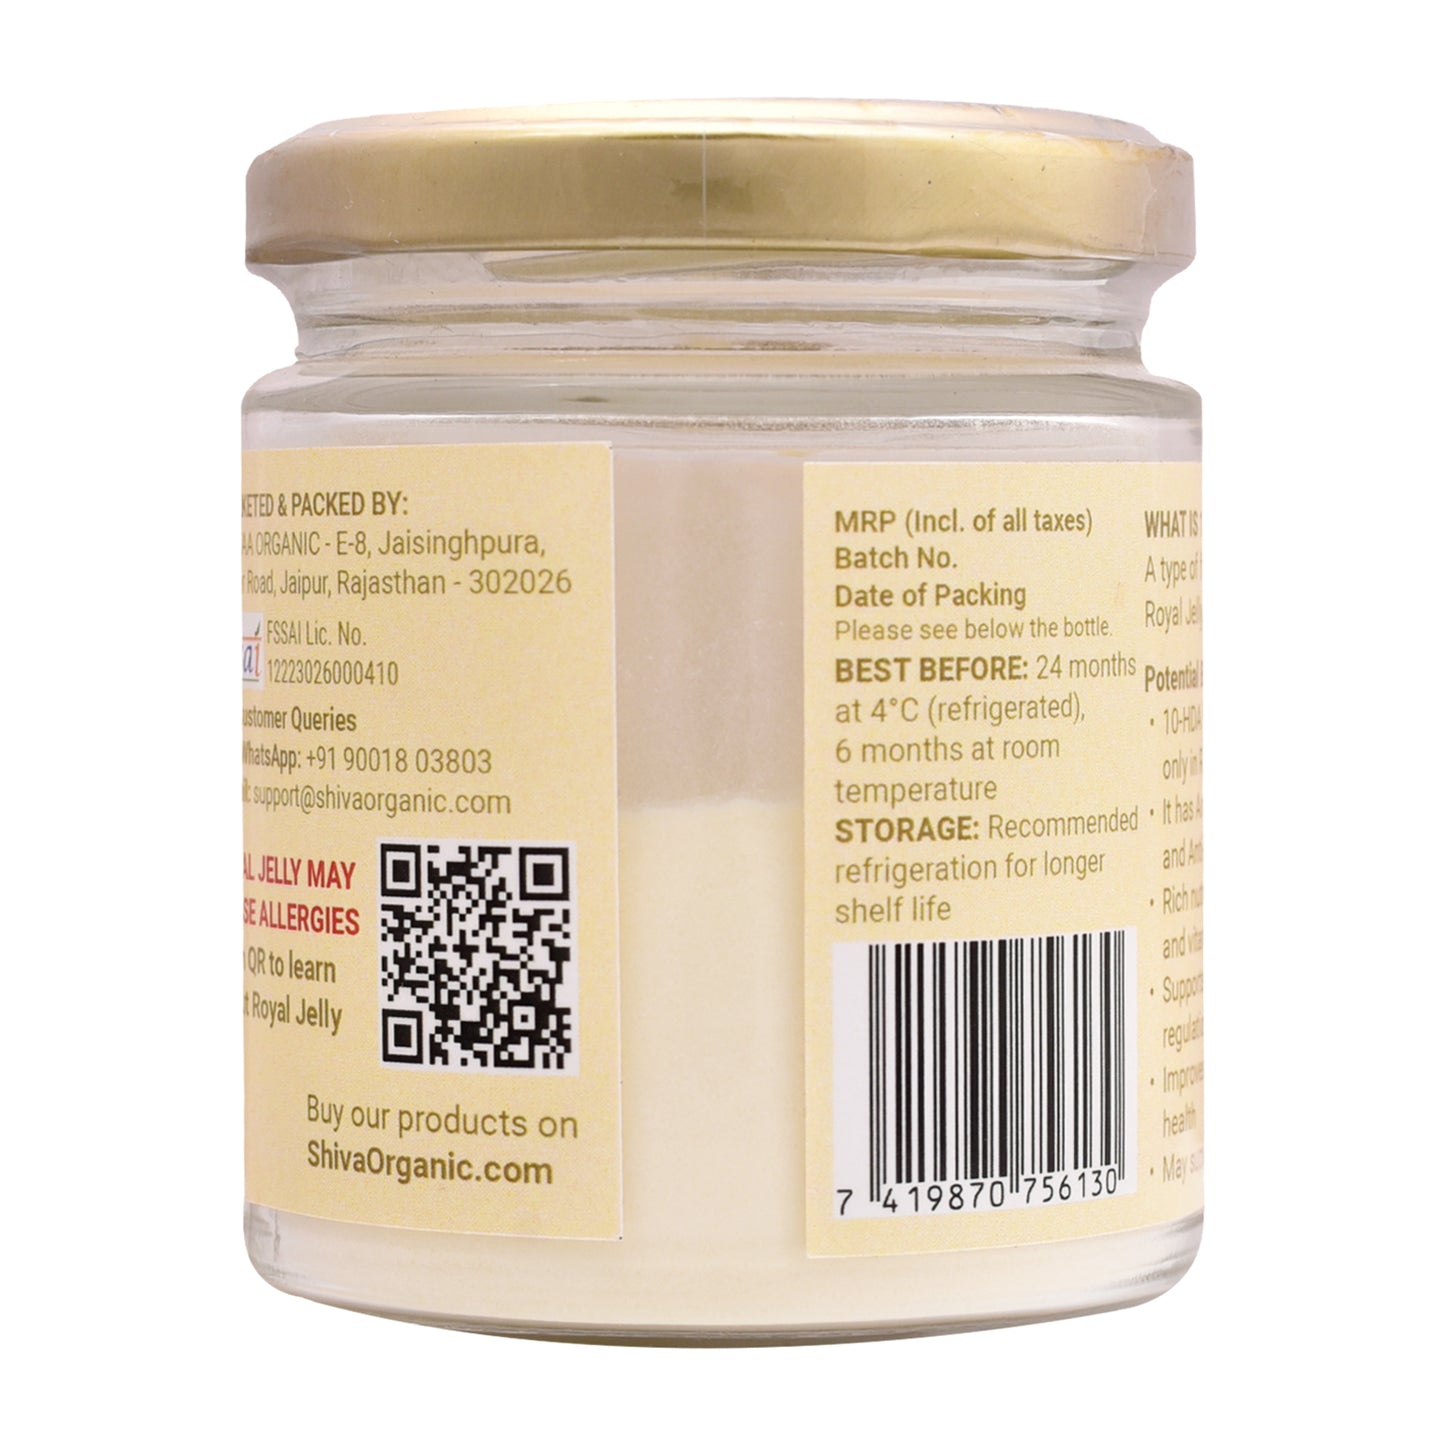 Royal Jelly Dry | Freeze Dry 10HDA-6% | 50g | Shiva Organic